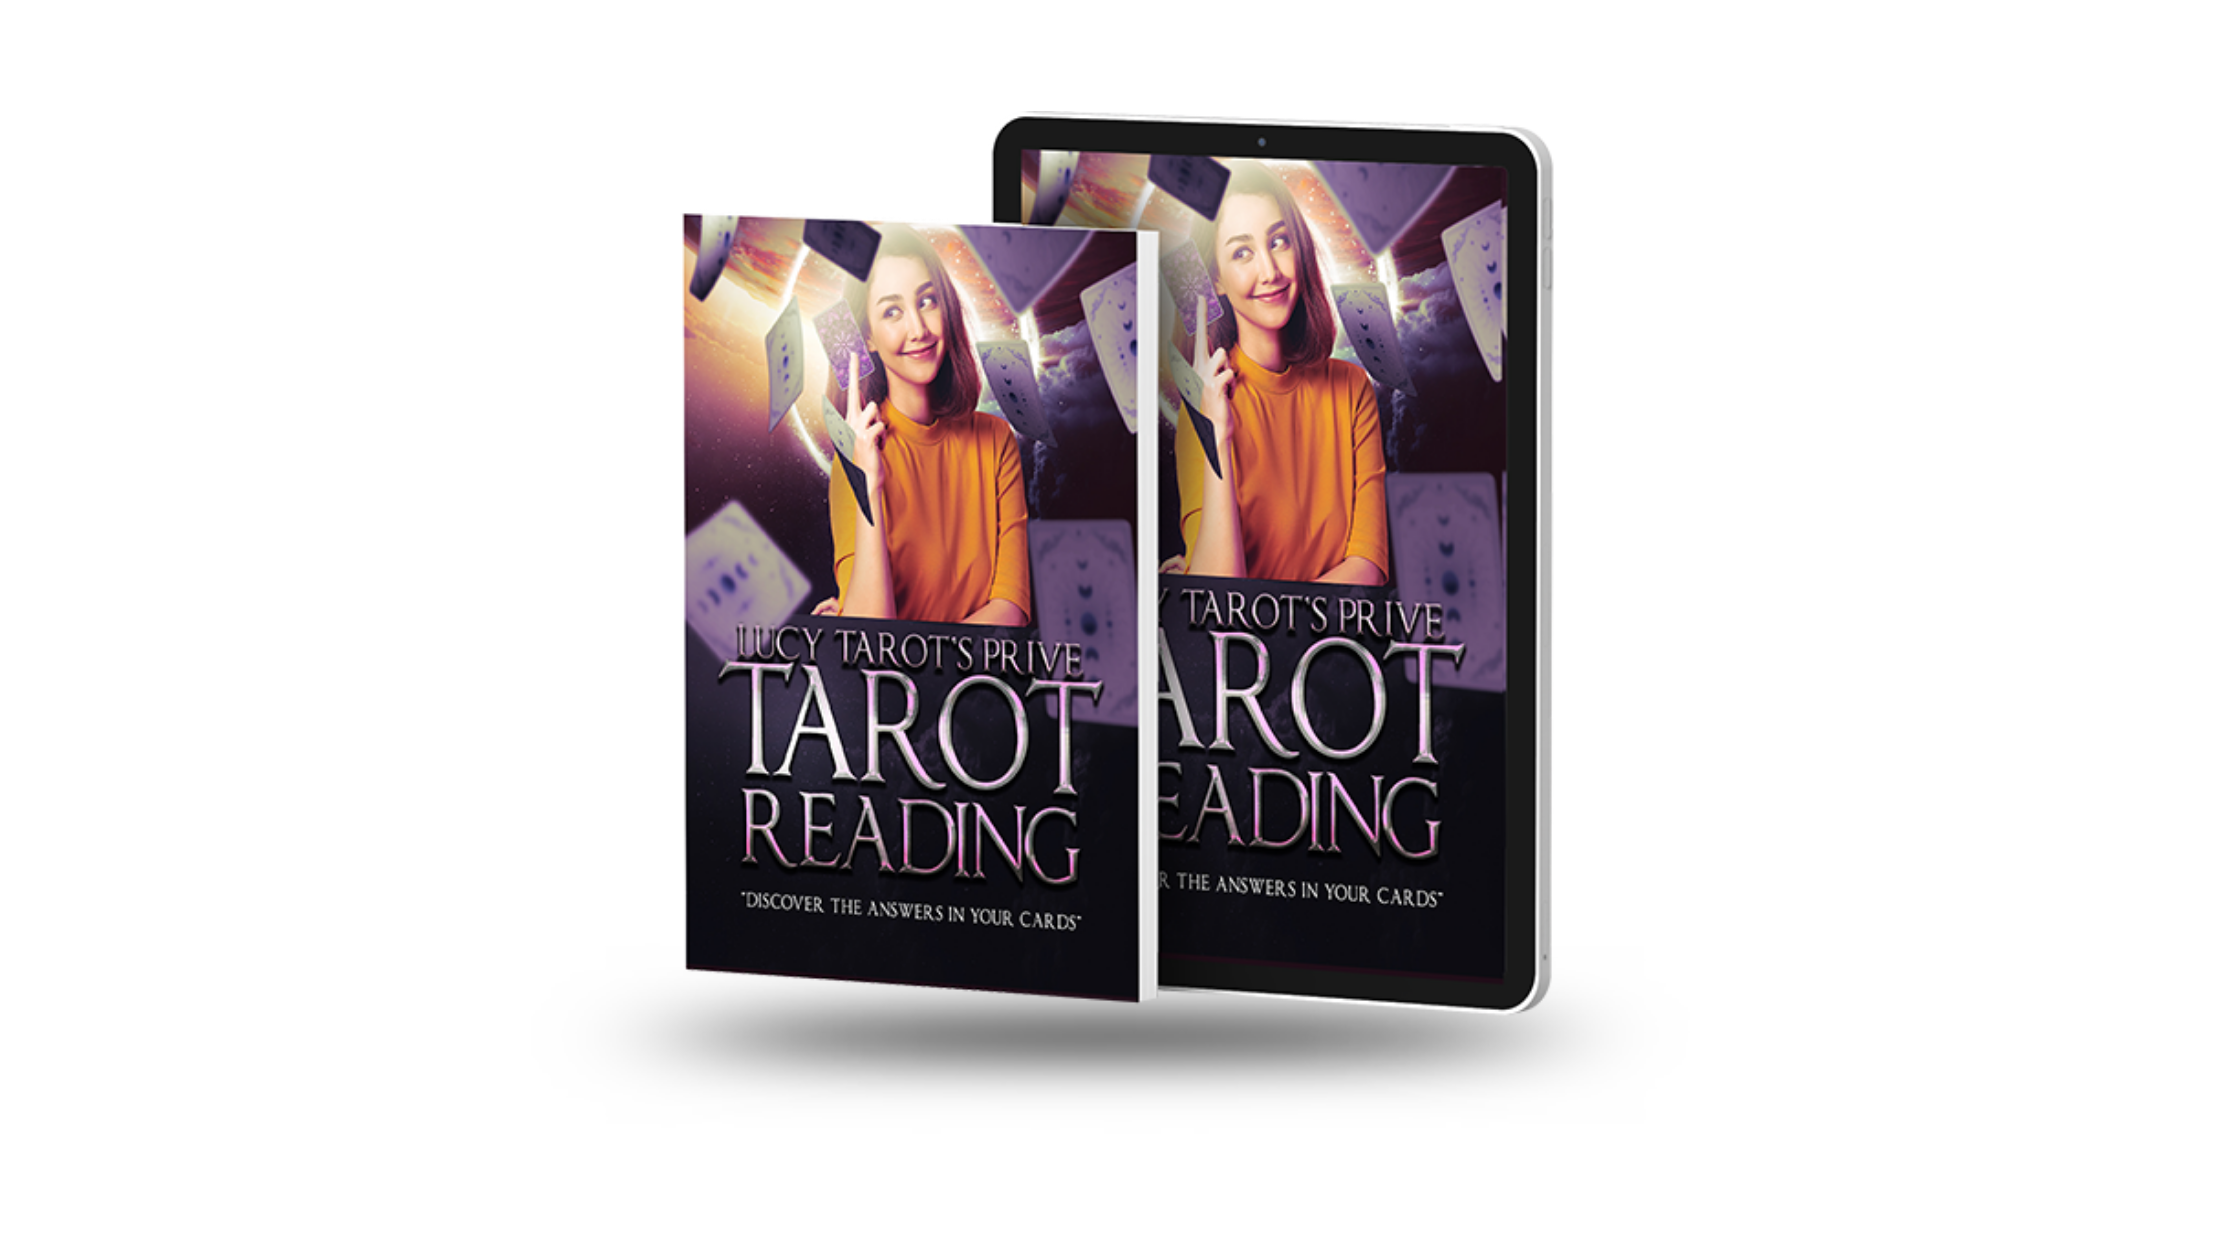 Lucy Tarot Card Reading Reviews